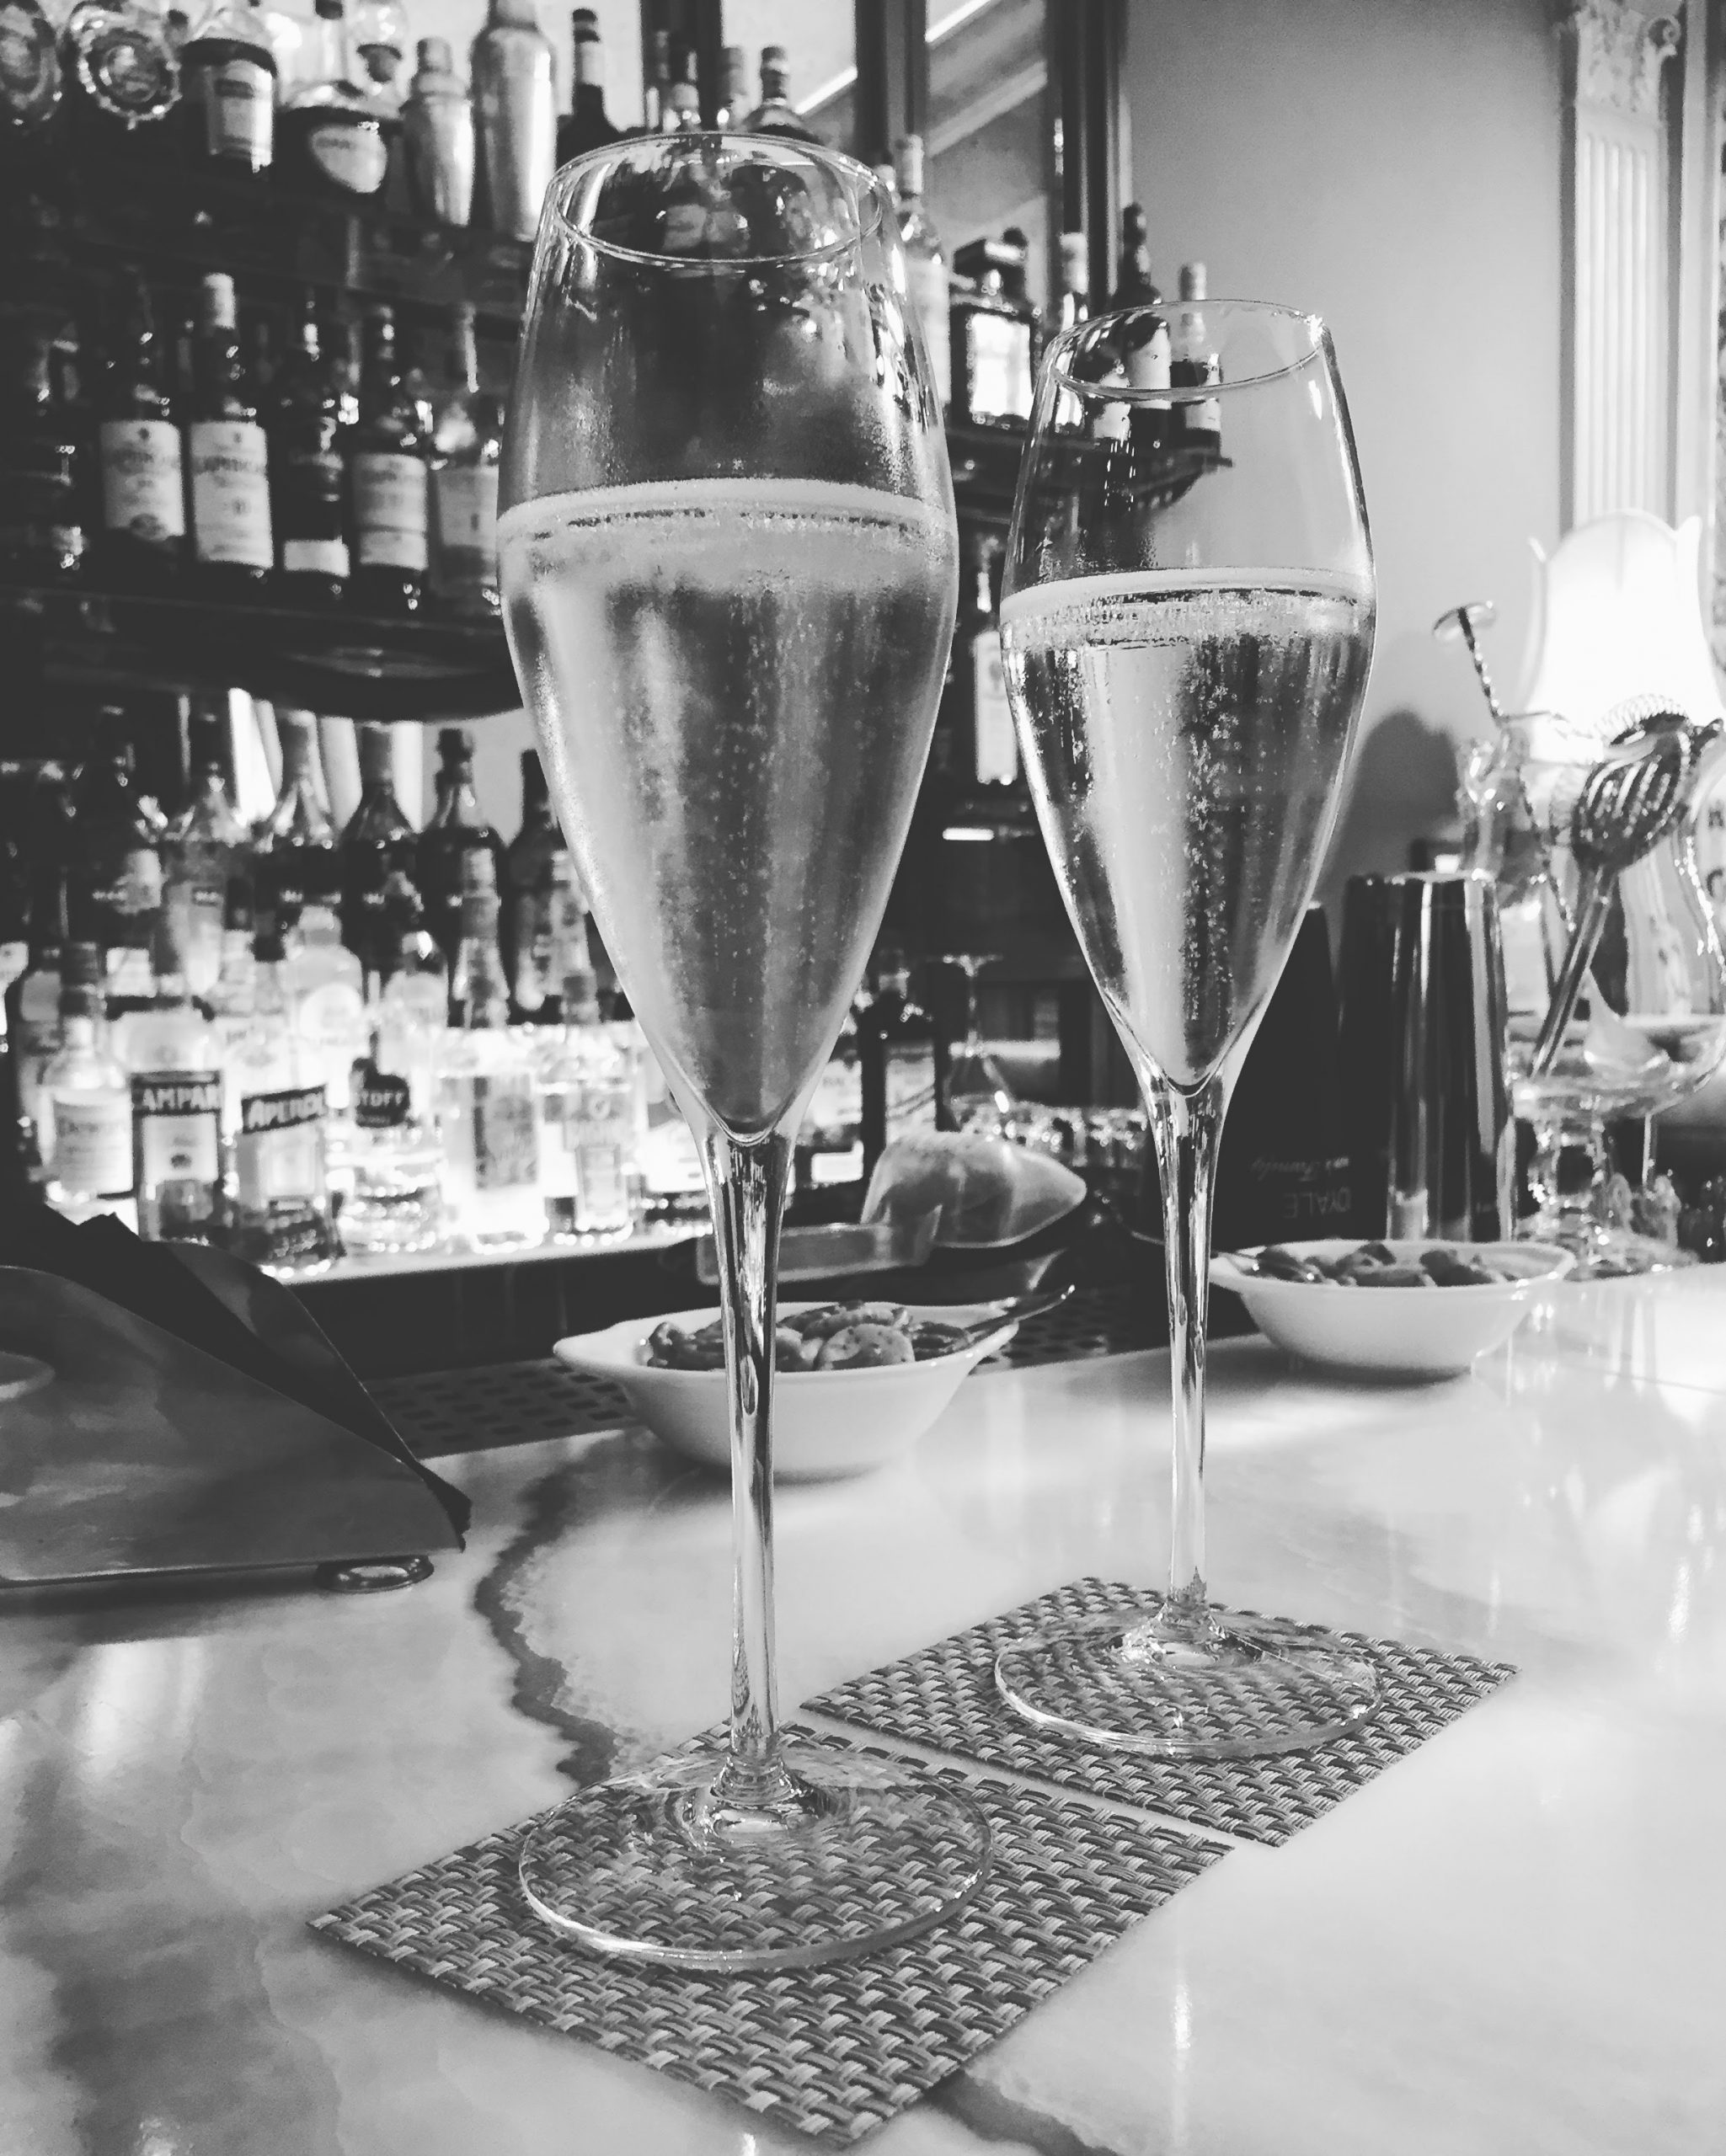 Two glasses of Prosecco at Hotel Piram in Rome.